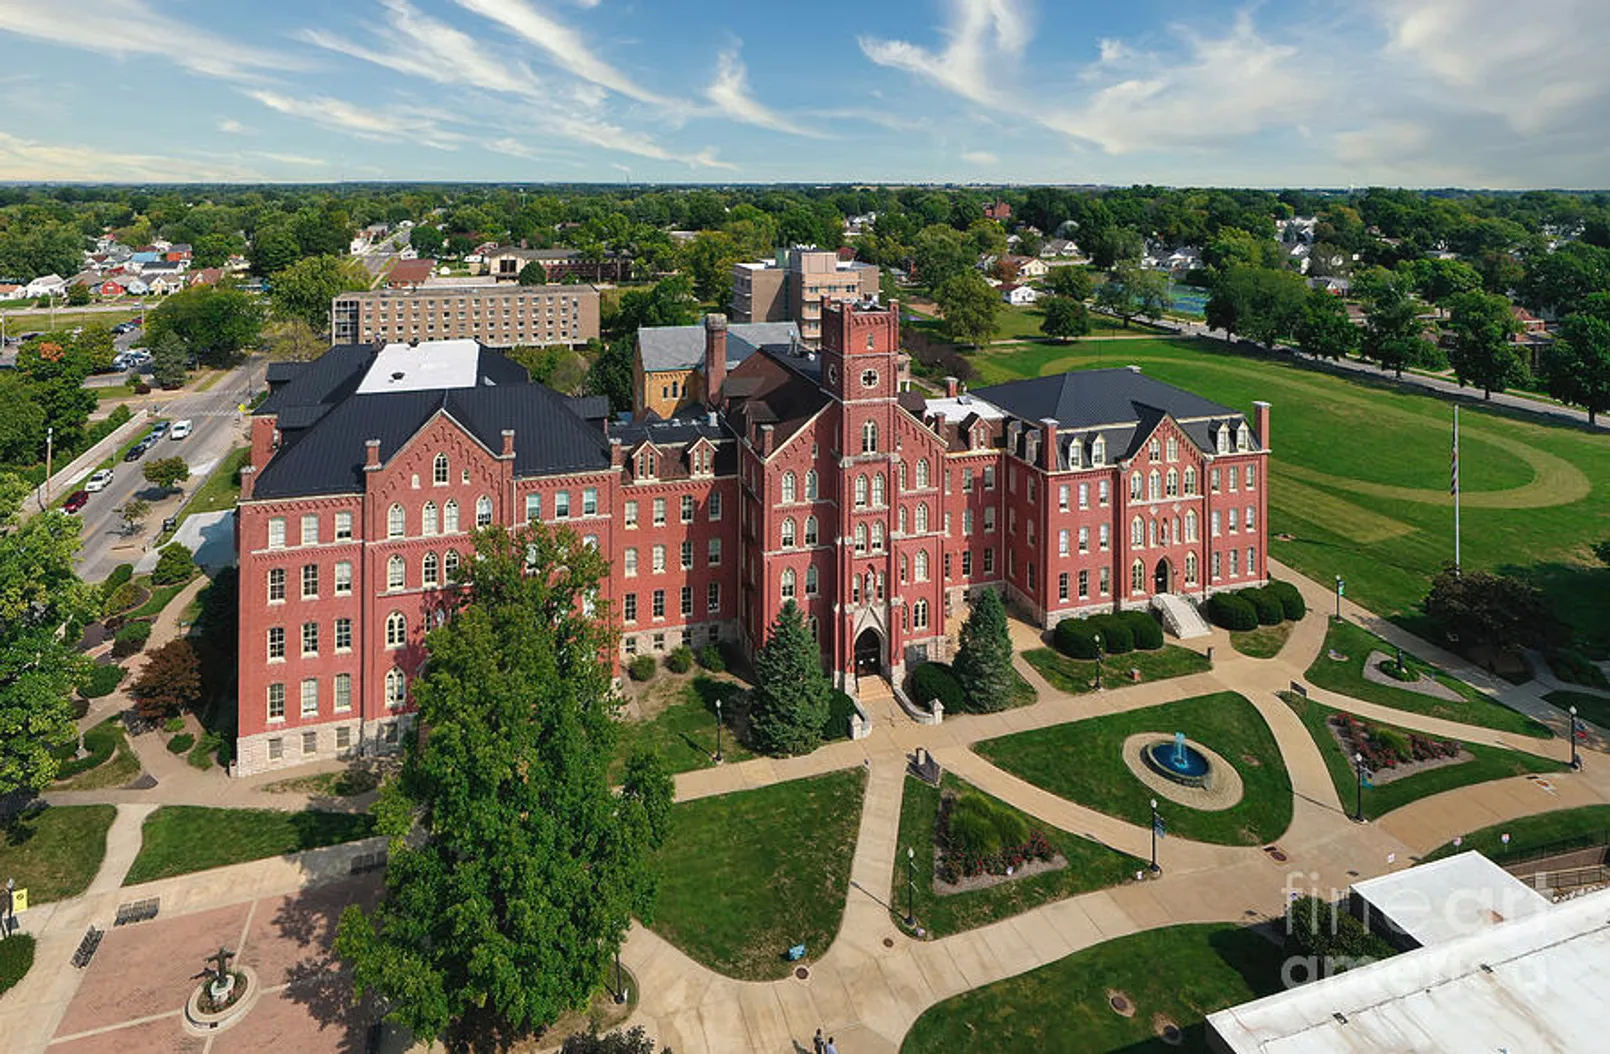 1 Quincy University Aerial Photo Robert Turek Fine Art Photography.jpg